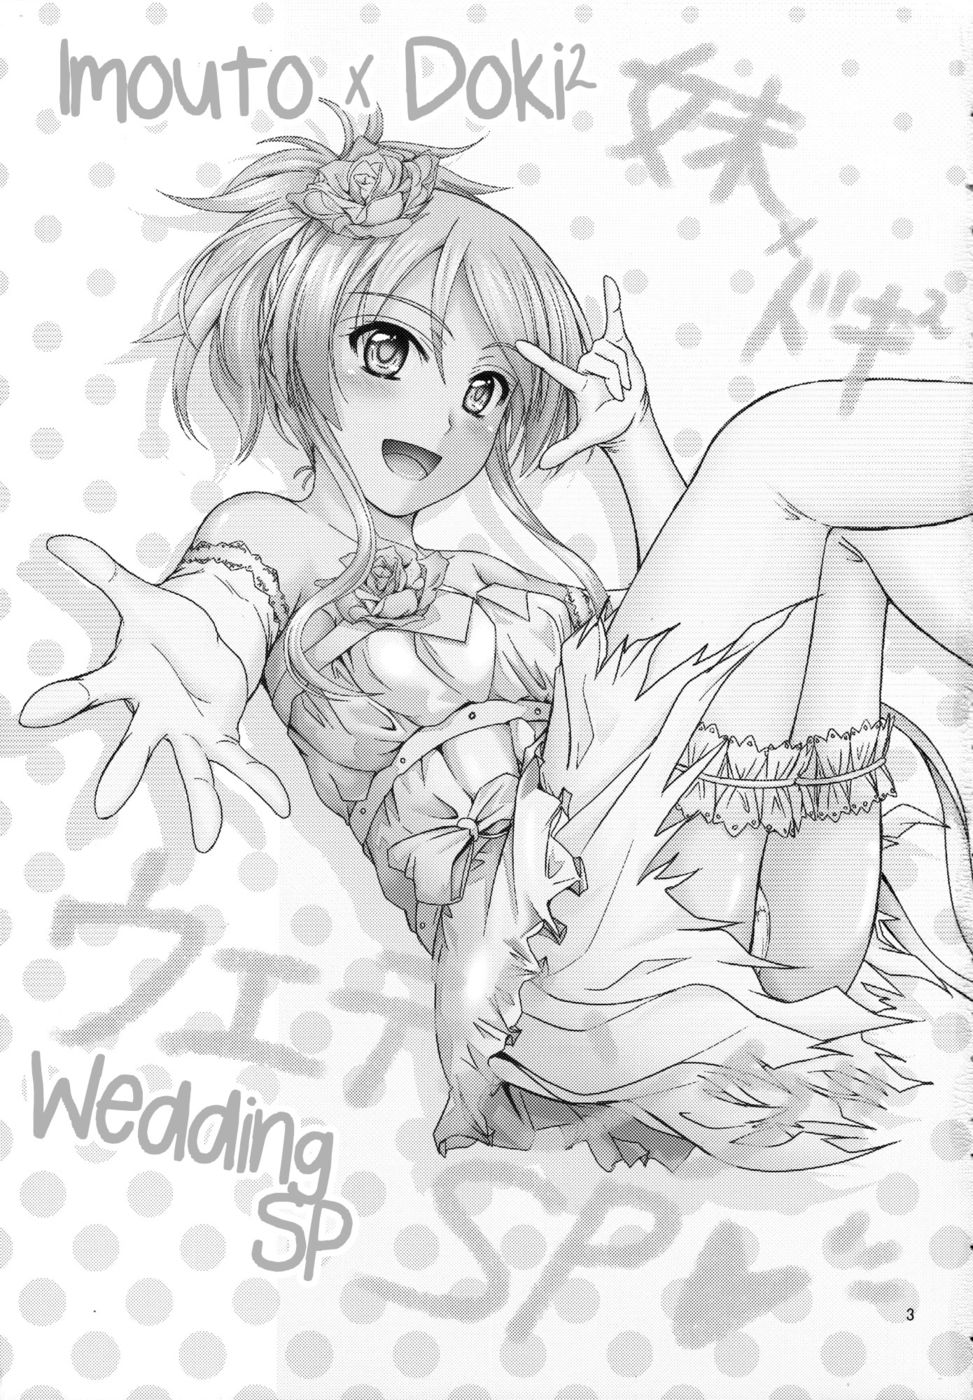 Hentai Manga Comic-Imouto x Doki2 Wedding SP-Read-2